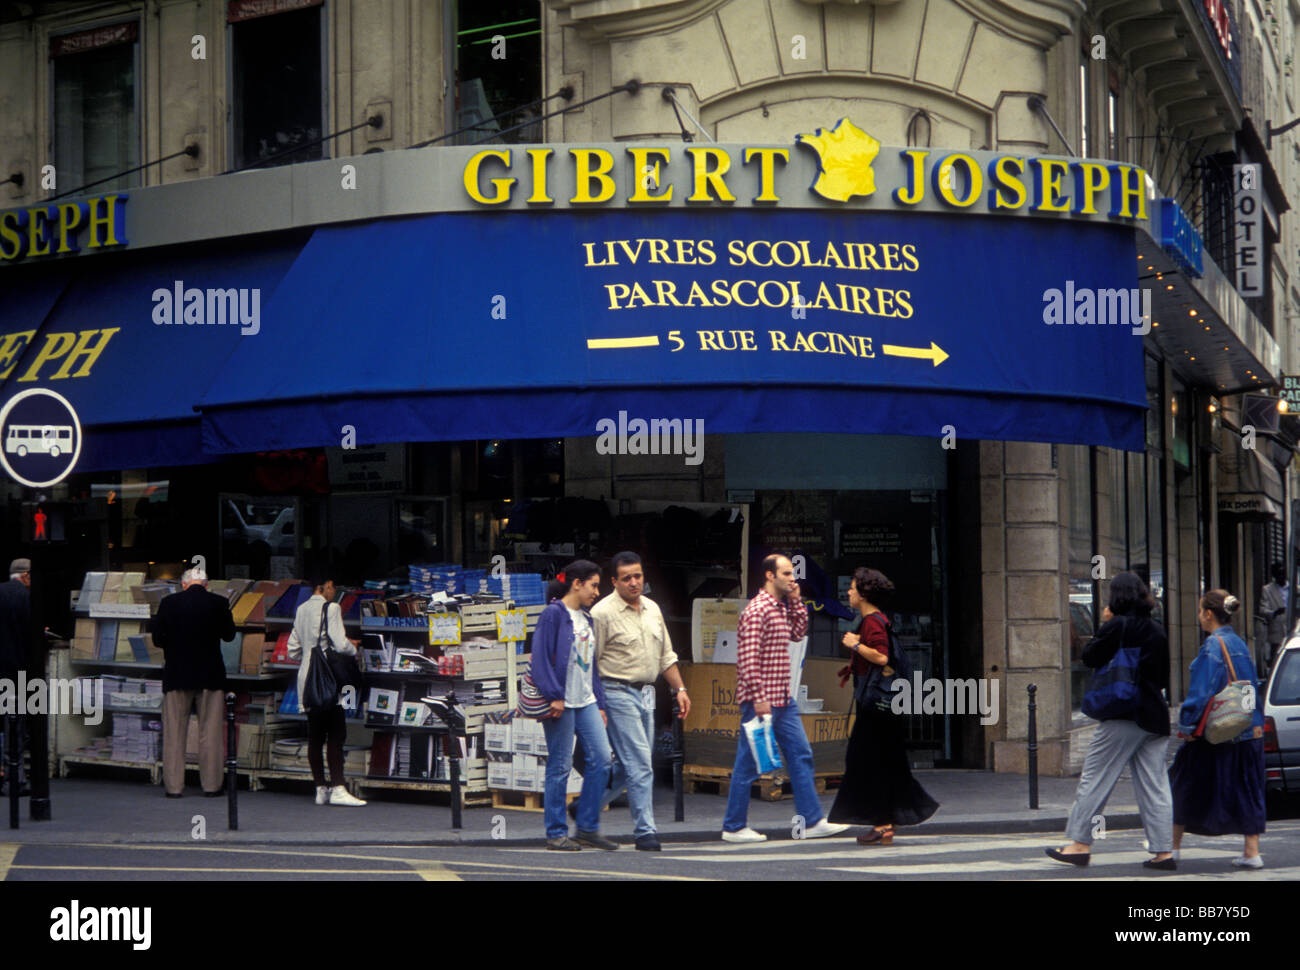 French people, shopping, Gibert Joseph bookstore, bookshop, book dealer, Boulevard Saint-Michel, Latin Quarter, Paris, Ile-de-France, France Stock Photo